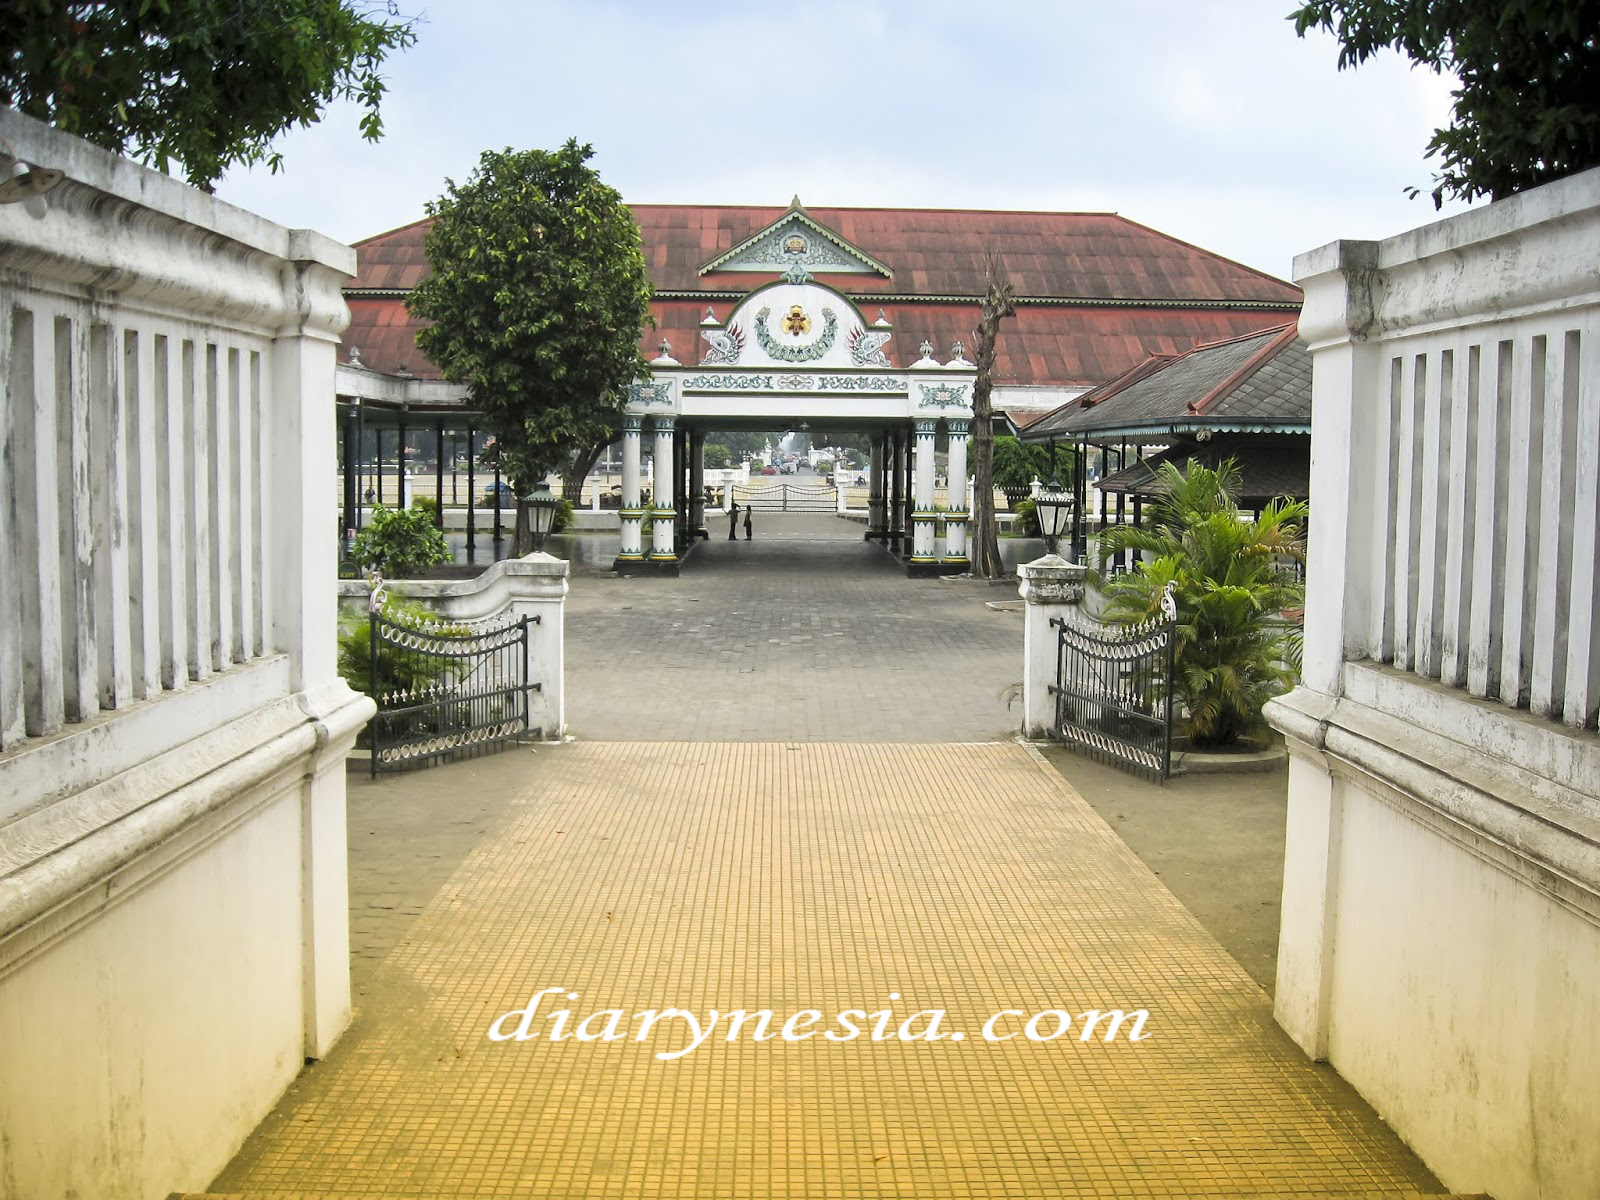 historical places in yogyakarta, things to do in yogyakarta region, Keraton Ngayogyakarta or Yogyakarta Palace tourist destination, diarynesia